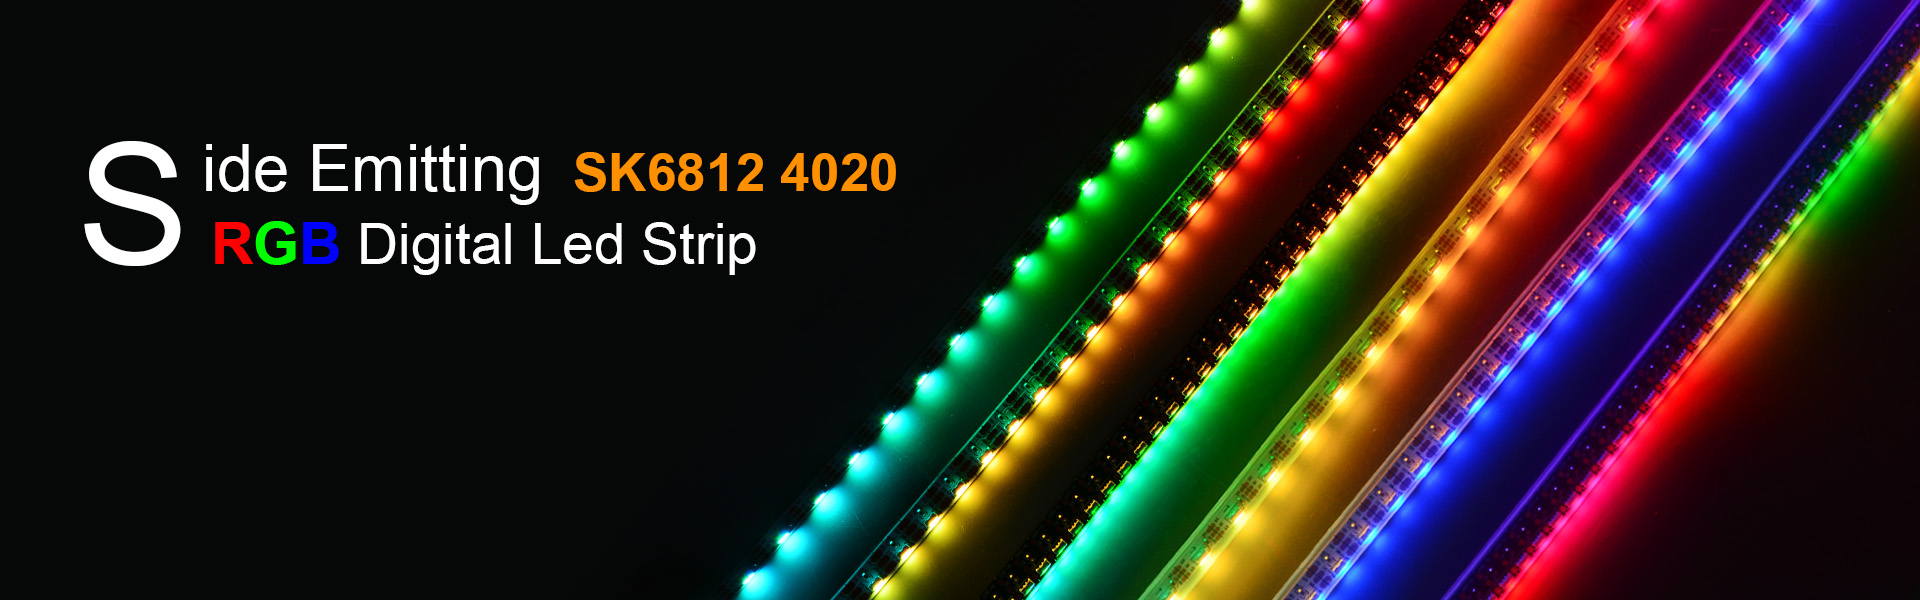 COXO New Side Emitting SK6812 4020 RGB Digital Led Strip